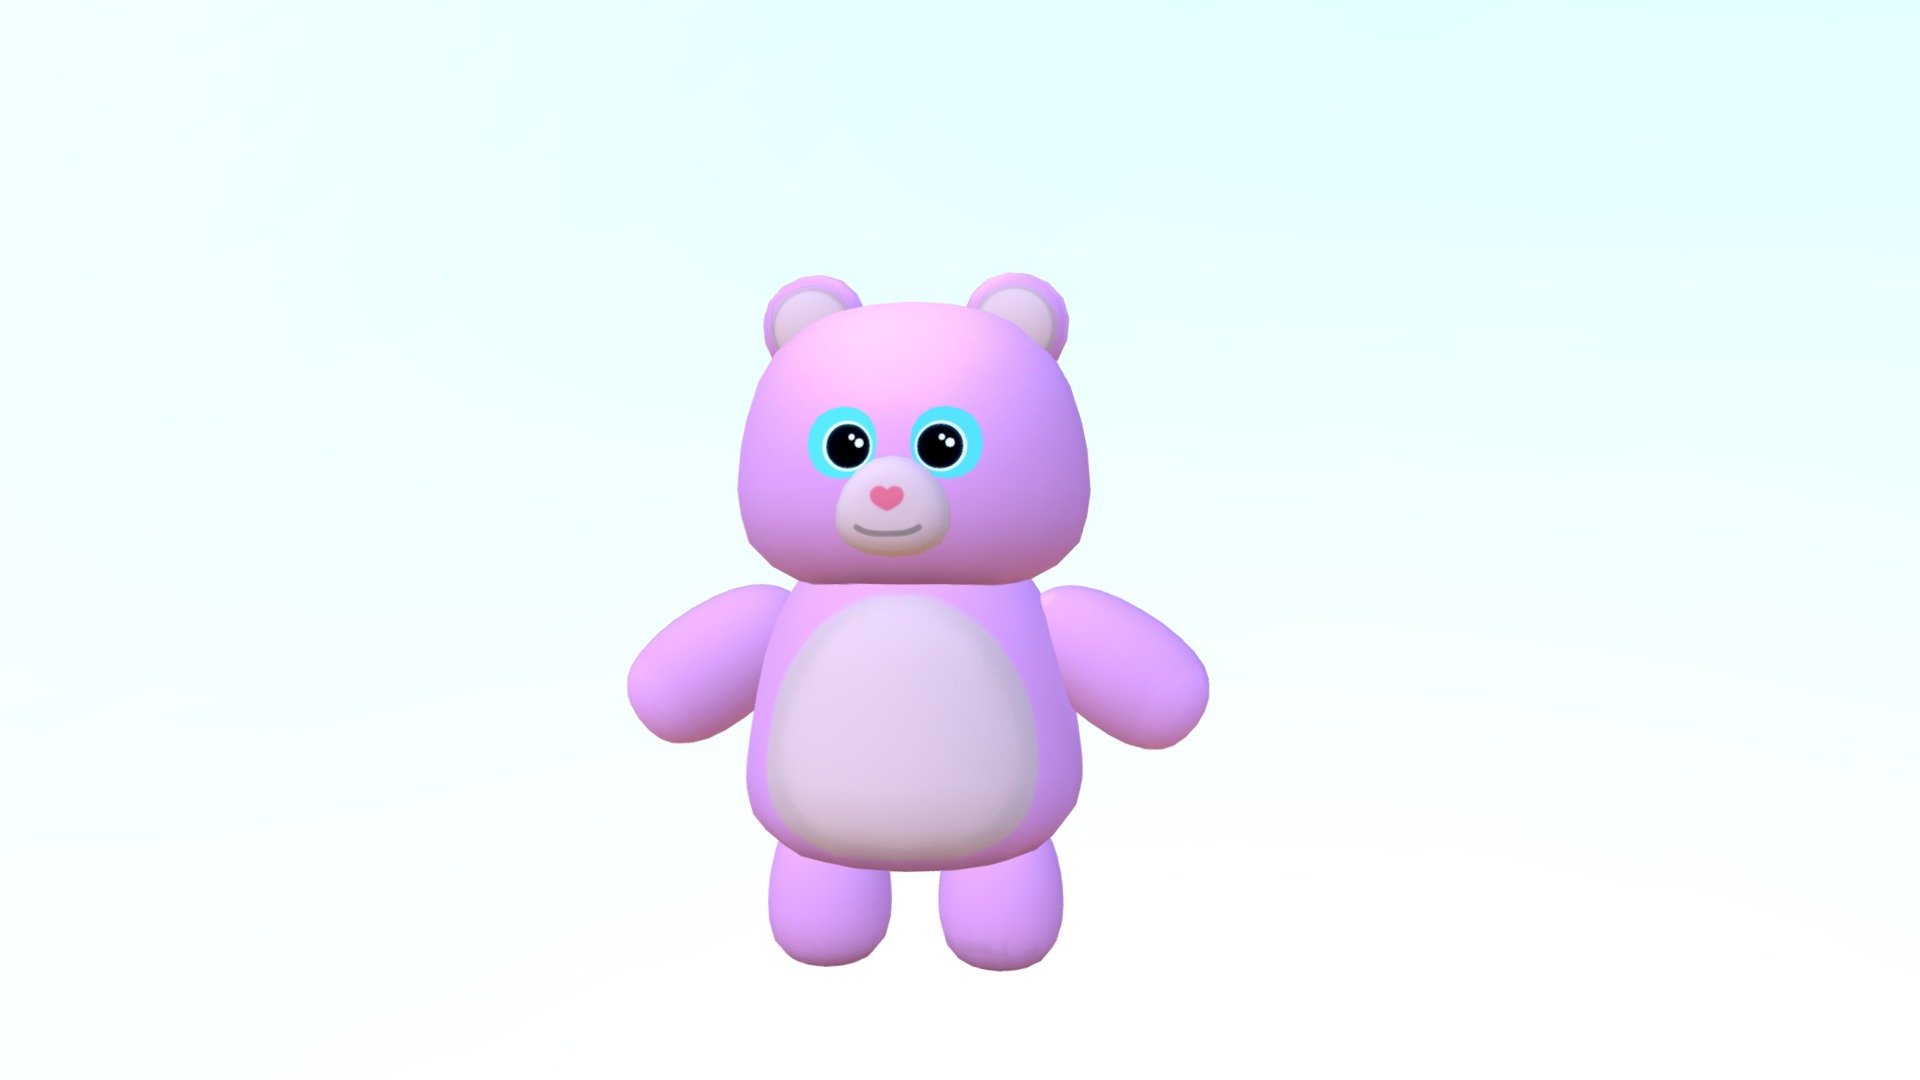 Pink teddy bear made in blender - Sugar Teddy Bear - Download Free 3D model by Suvalien 3d model